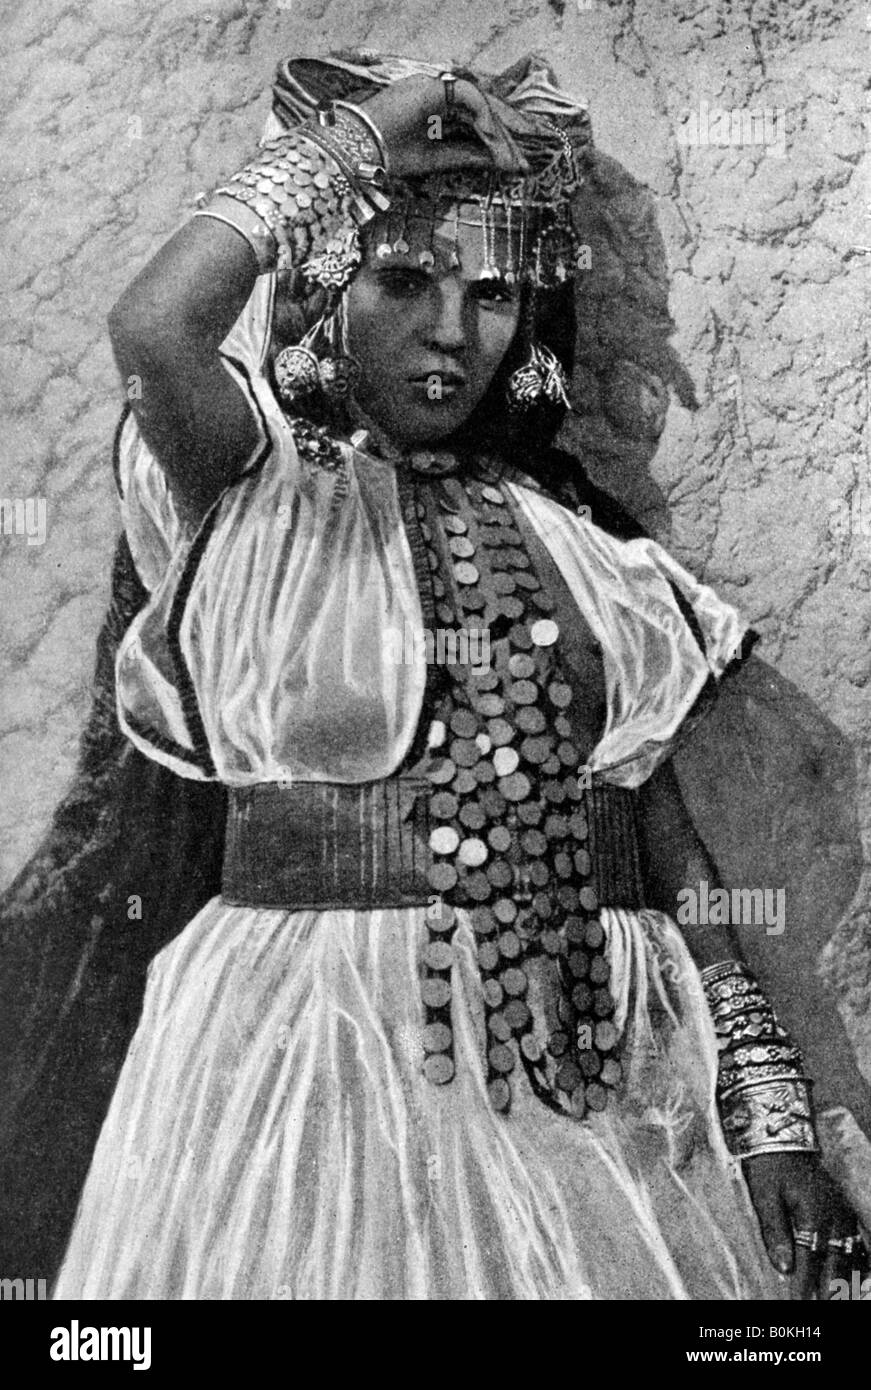 Algeria woman Black and White Stock Photos & Images - Alamy